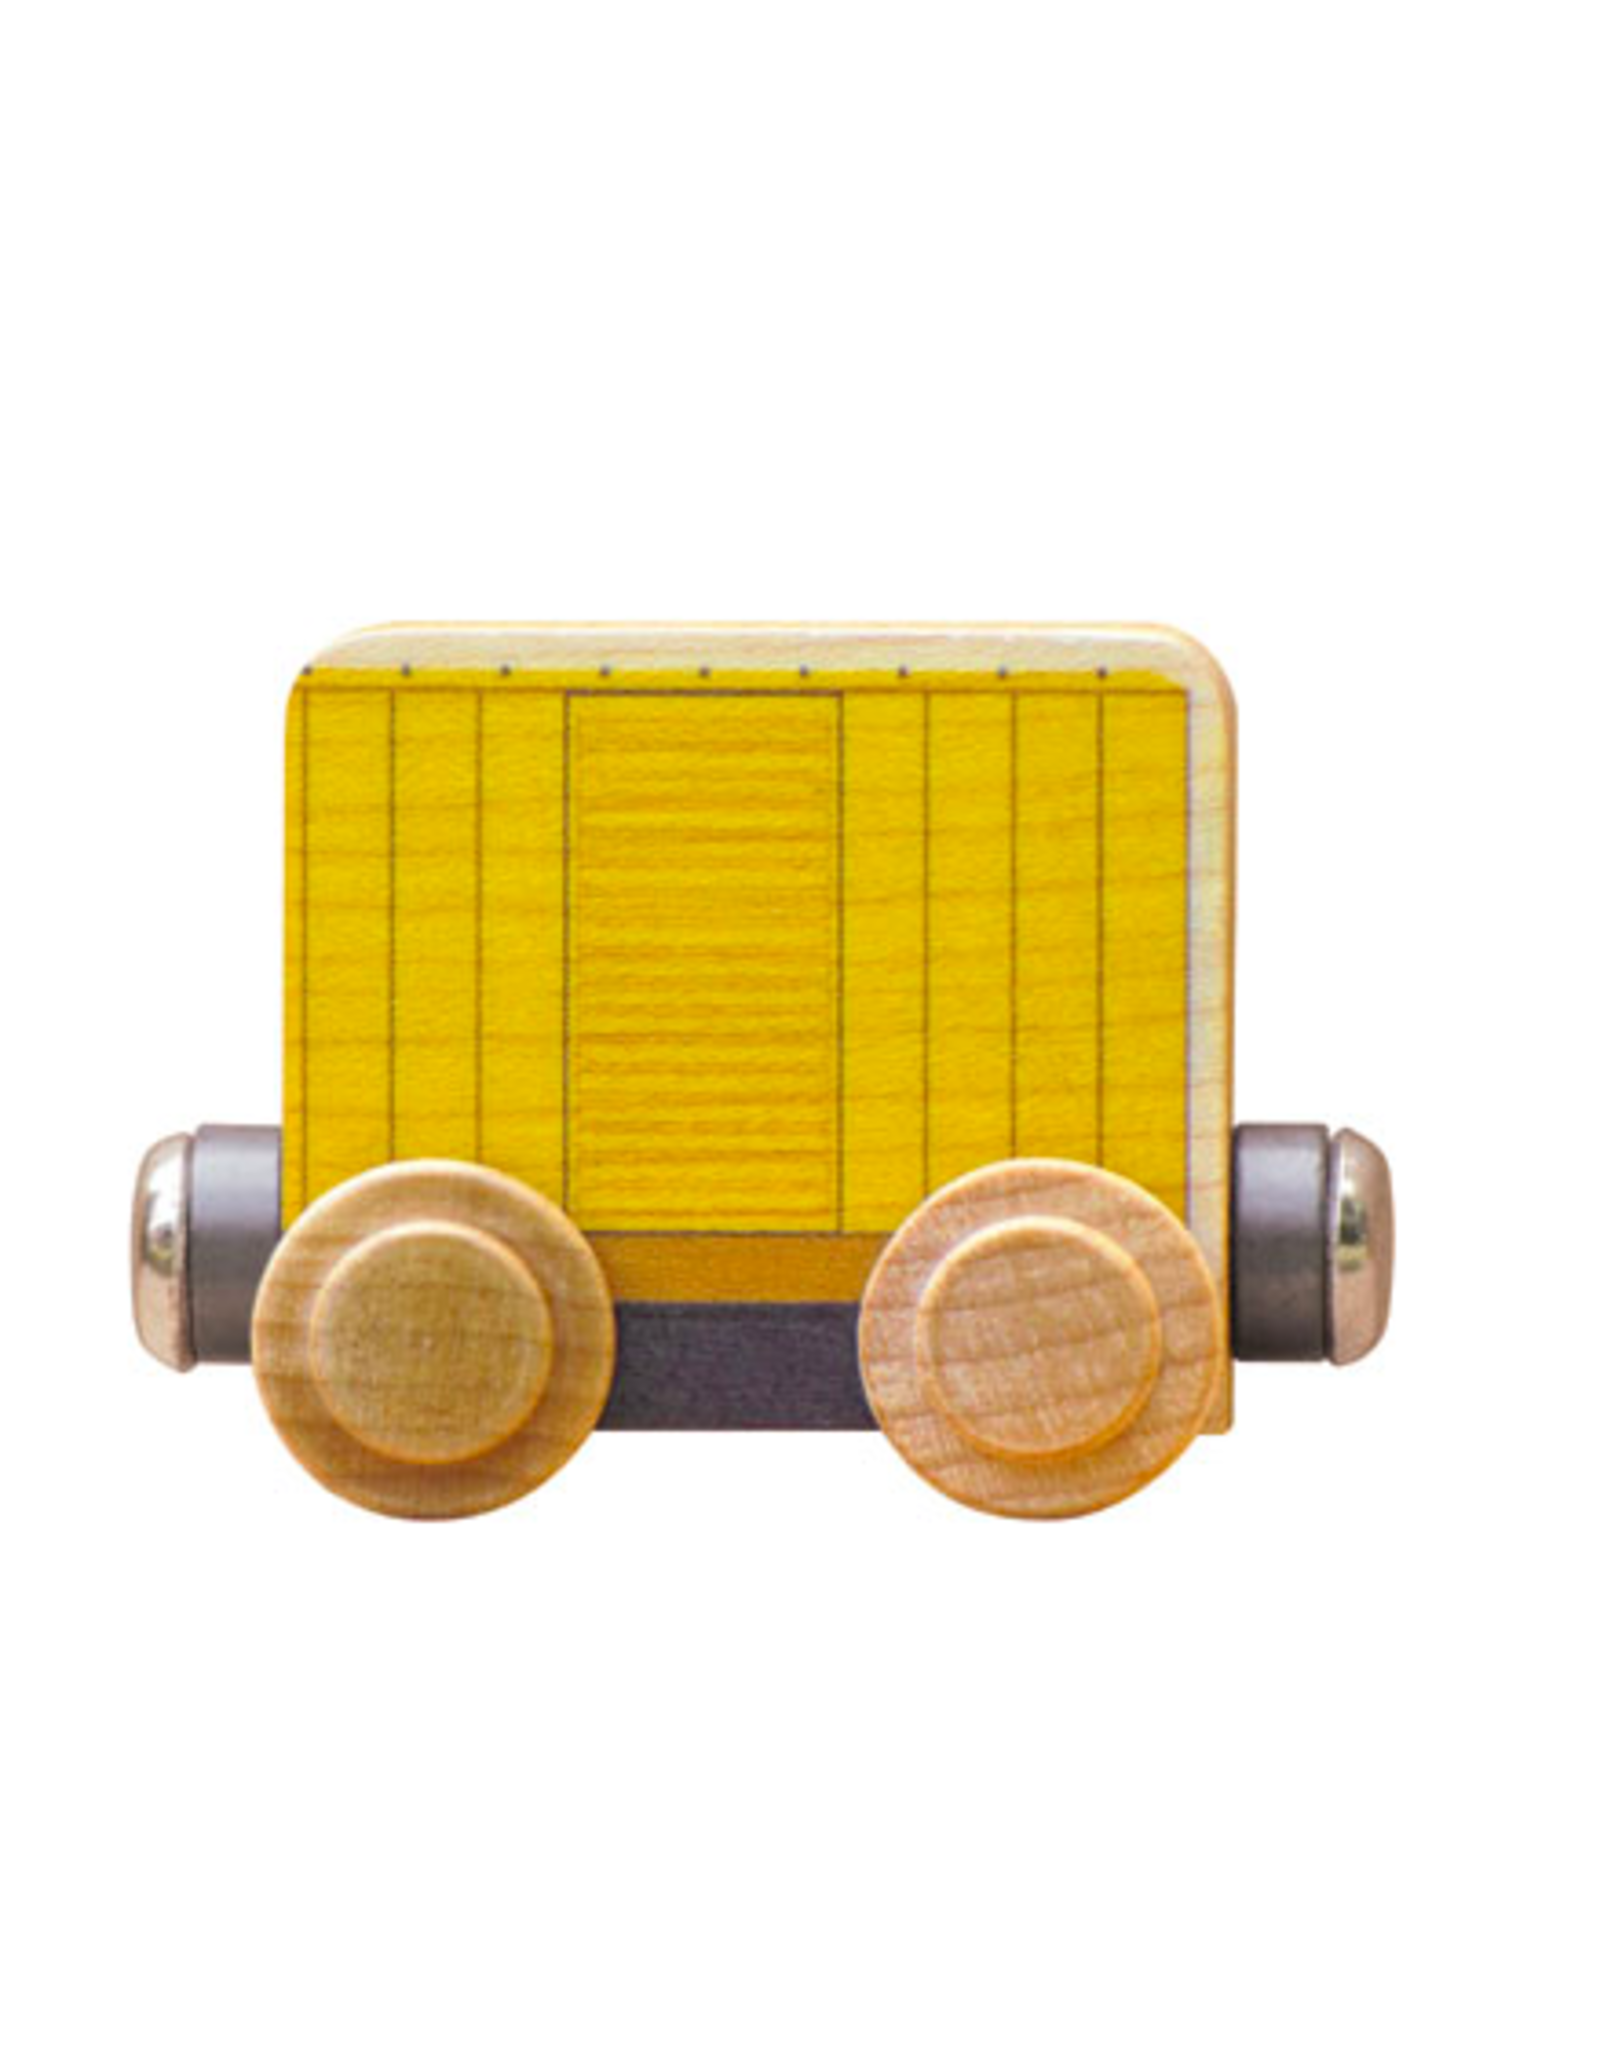 Name Train Box Car - Yellow